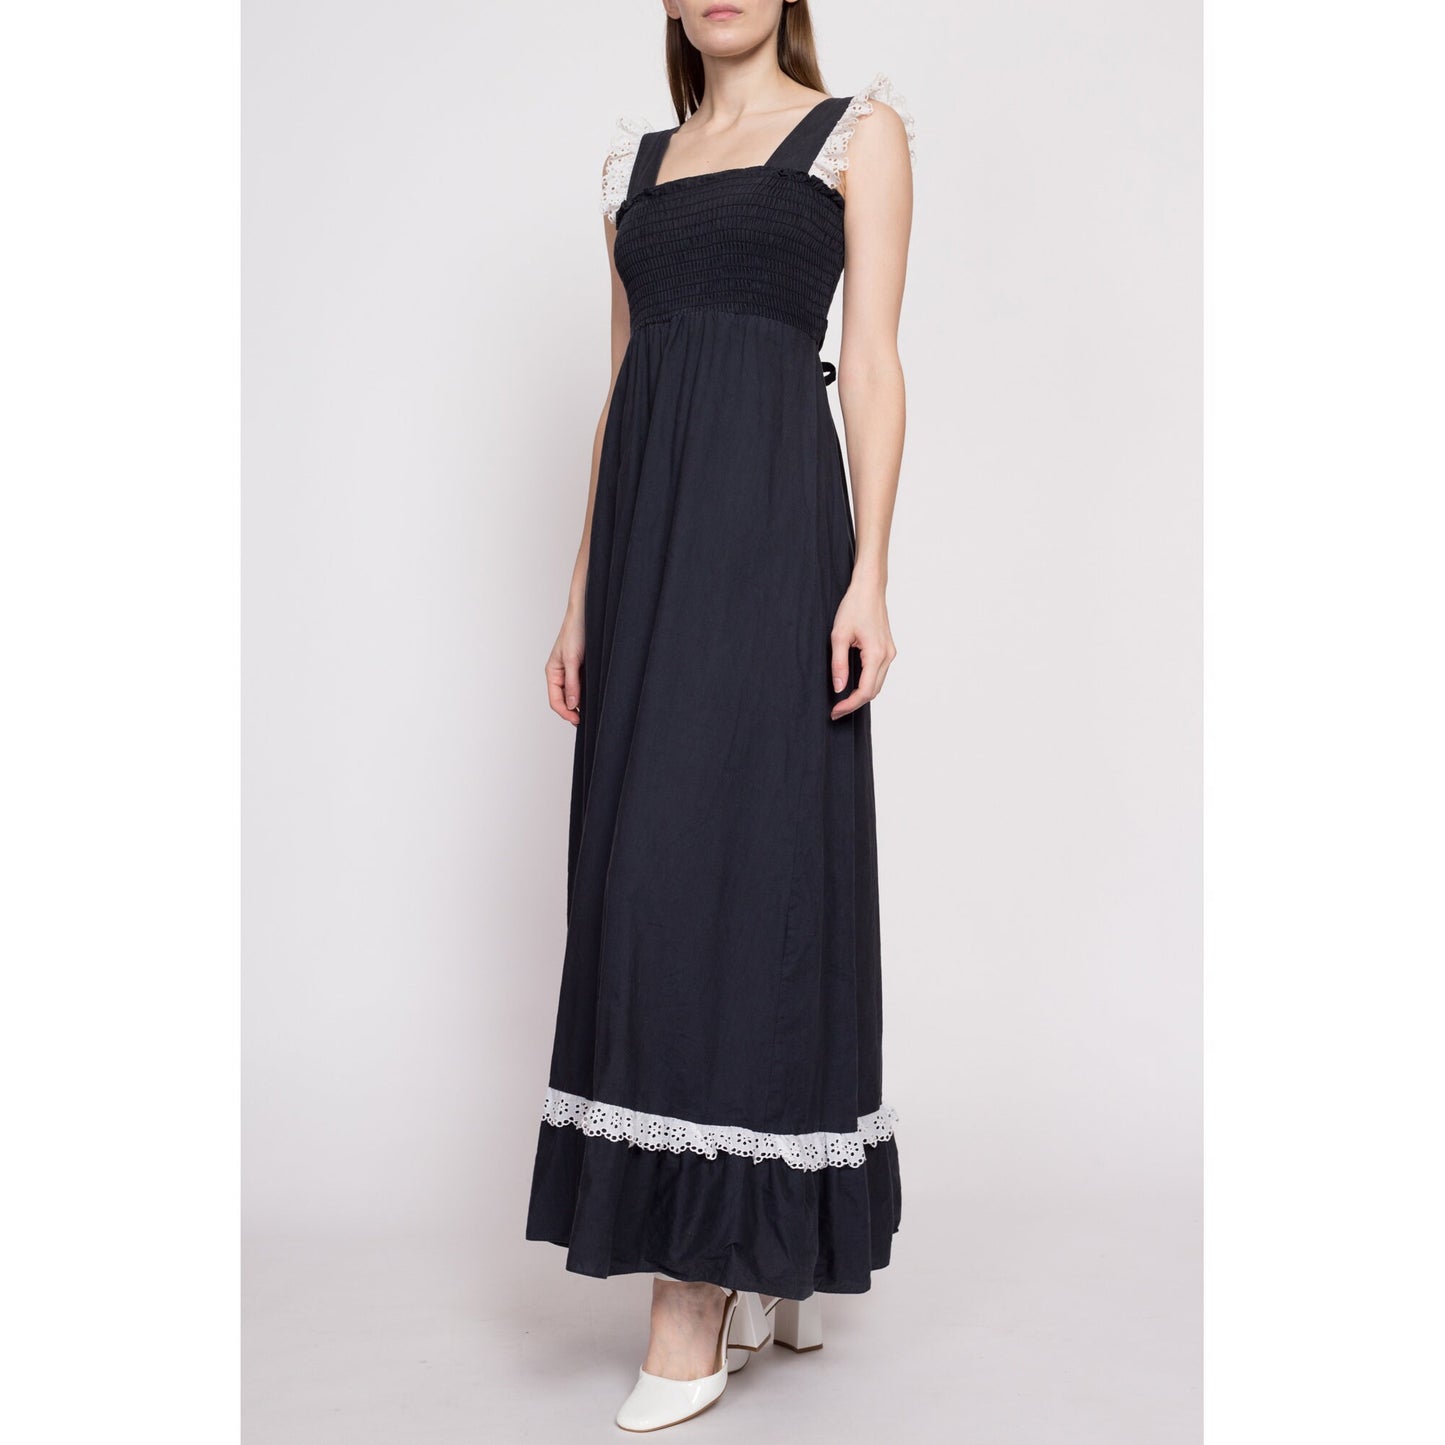 70s Boho Black & White Smocked Maxi Dress - Extra Small | Vintage Lace Trim A Line Long Sundress